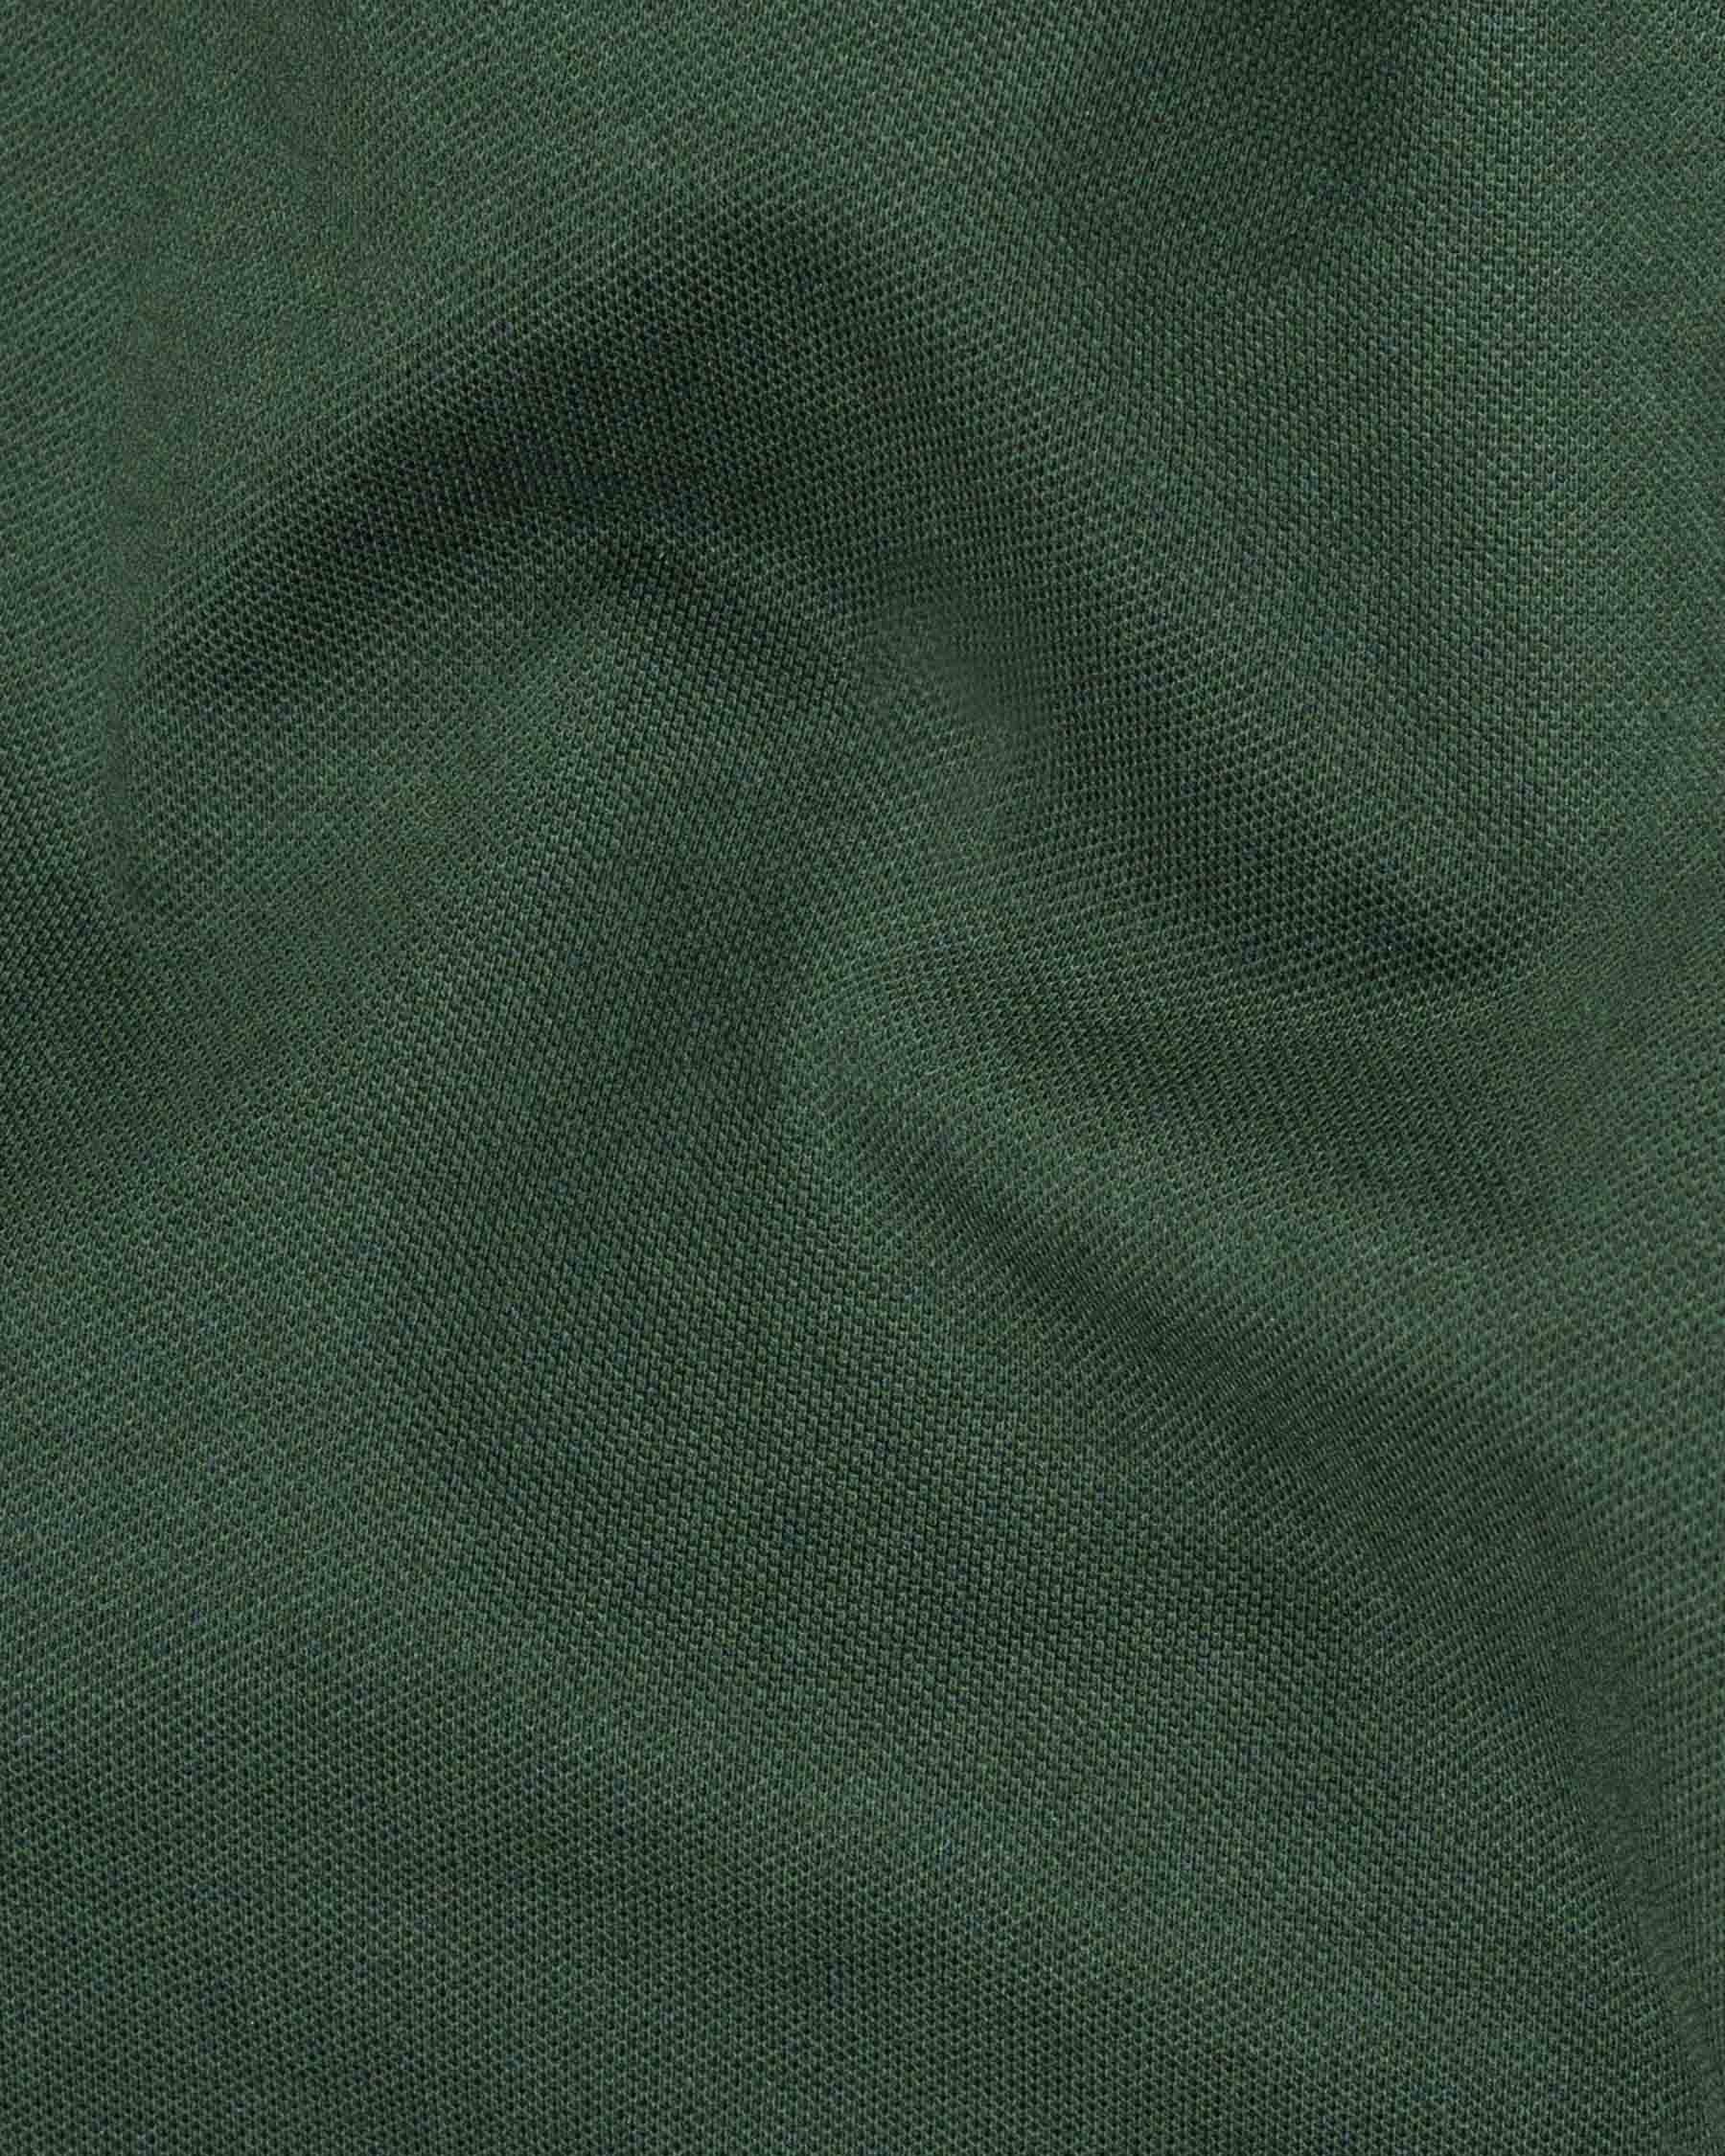 Iridium Green Super Soft Pique Polo Zipper T Shirt TS544-S, TS544-M, TS544-L, TS544-XL, TS544-XXL